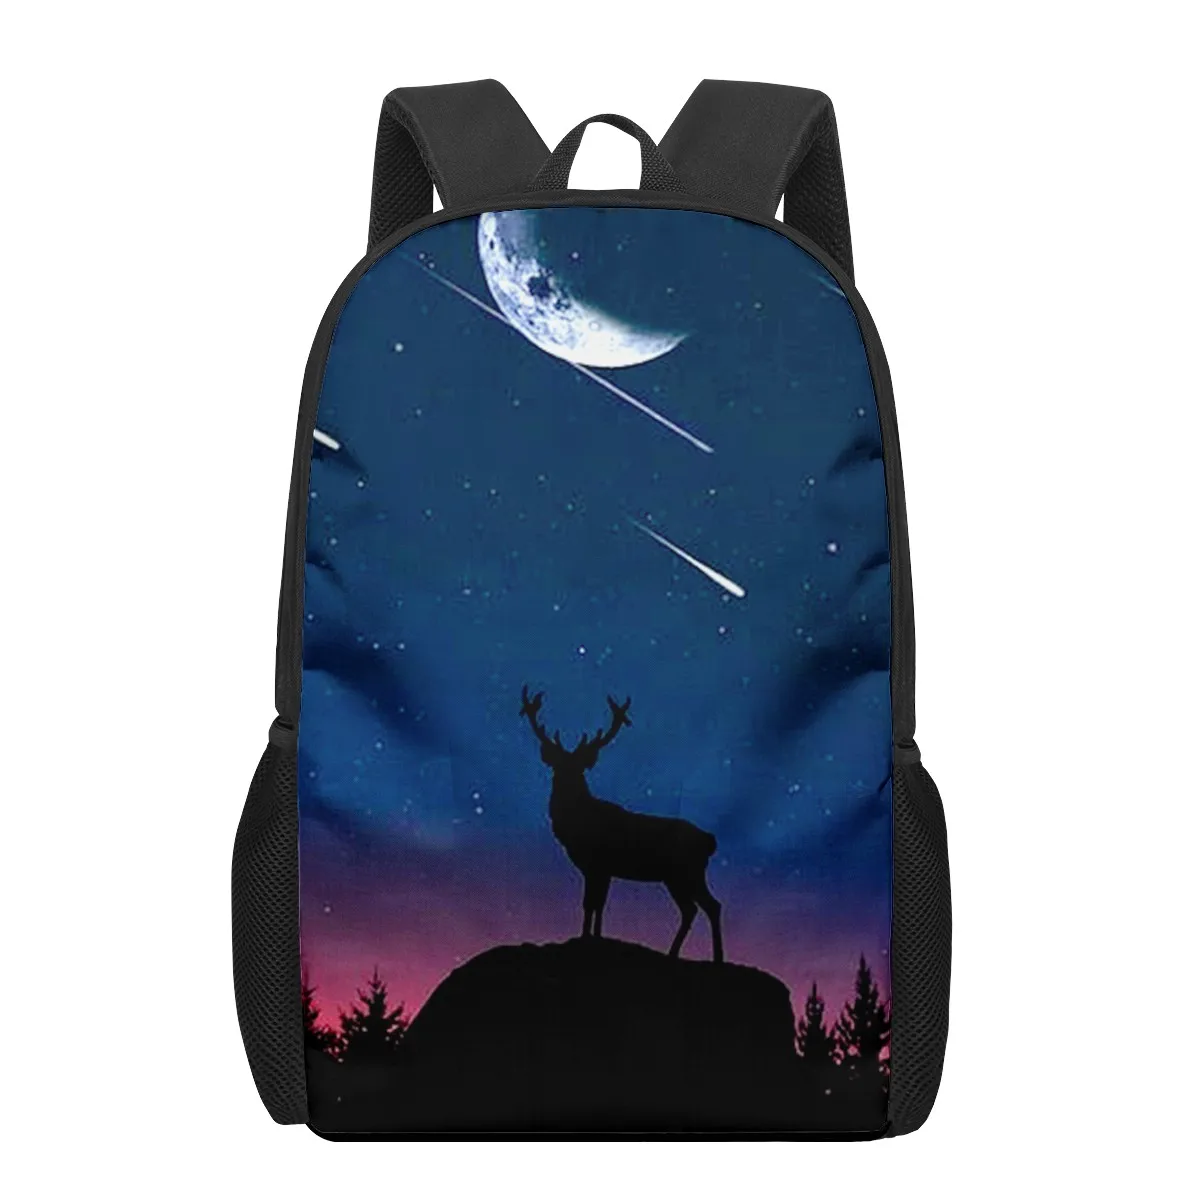 

Animal Creative Deer Printed School Bags Kids Bookbags Teenager Girls Boys Daily Casual Backpack Laptop Bag Travel Rucksacks